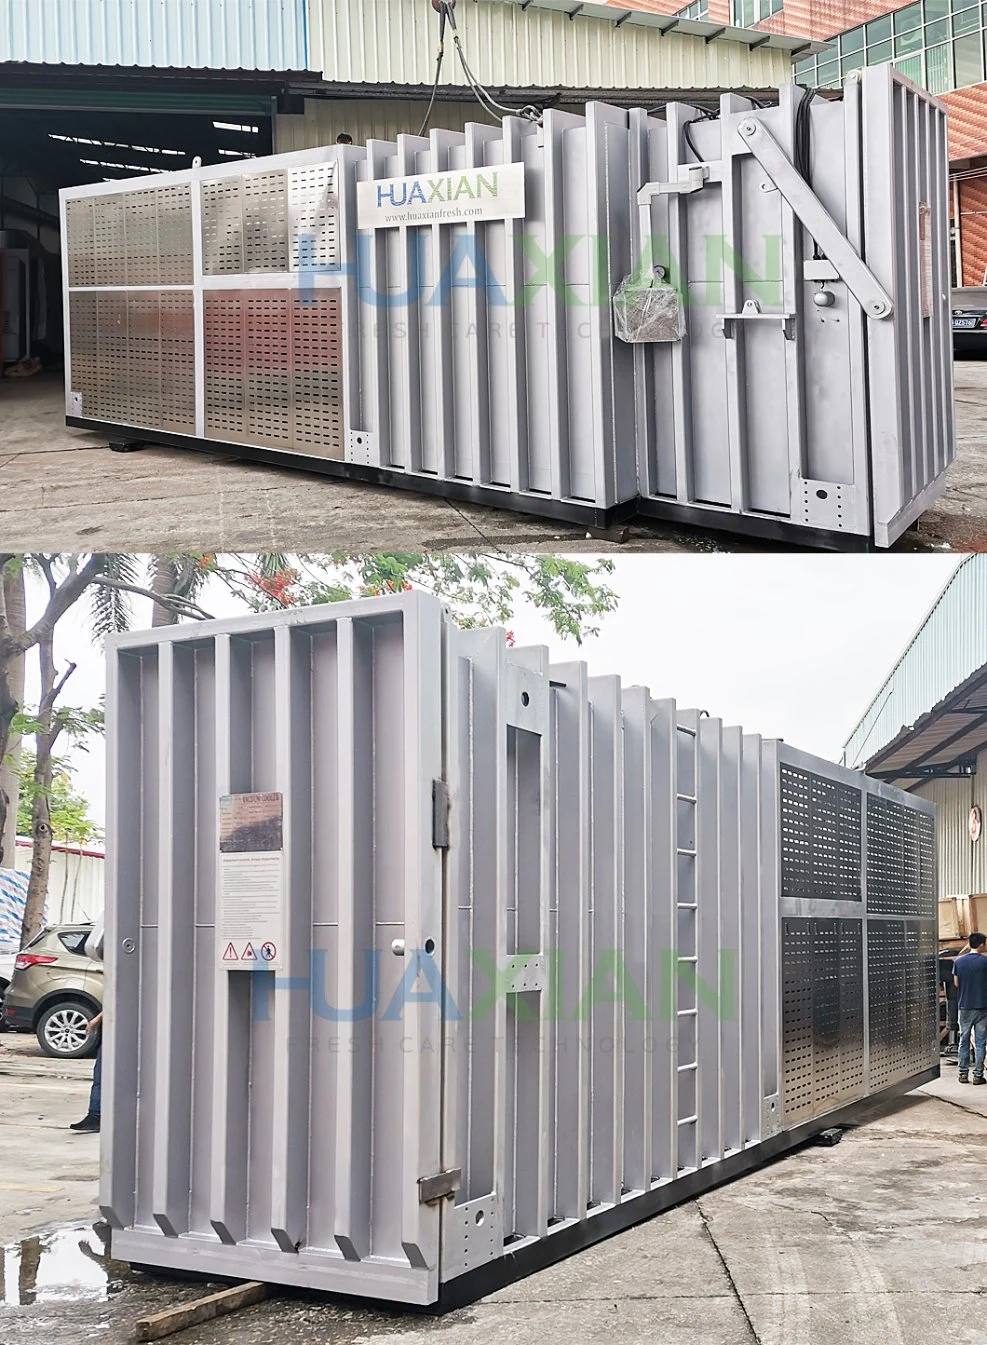 3 Pallet Vegetable Cooler Machine Refrigeration Unit for Sale, Easy Operation Vacuum Cooling Machine for Farm